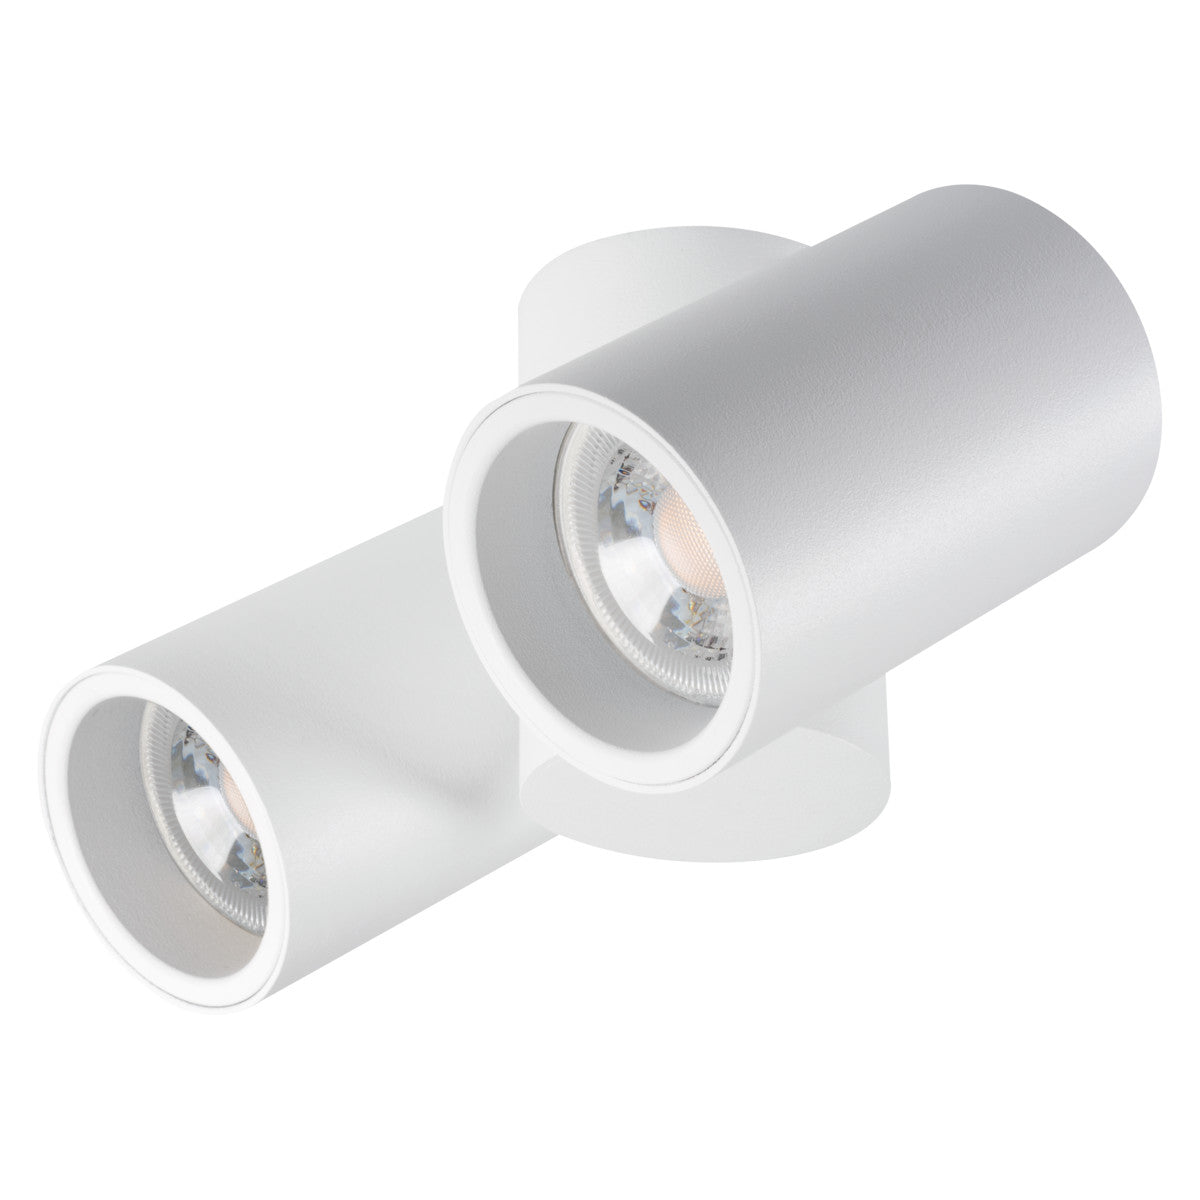 Kanlux BLURRO Single Double Ceiling Mounted GU10 Adjustable Spot Light Fitting